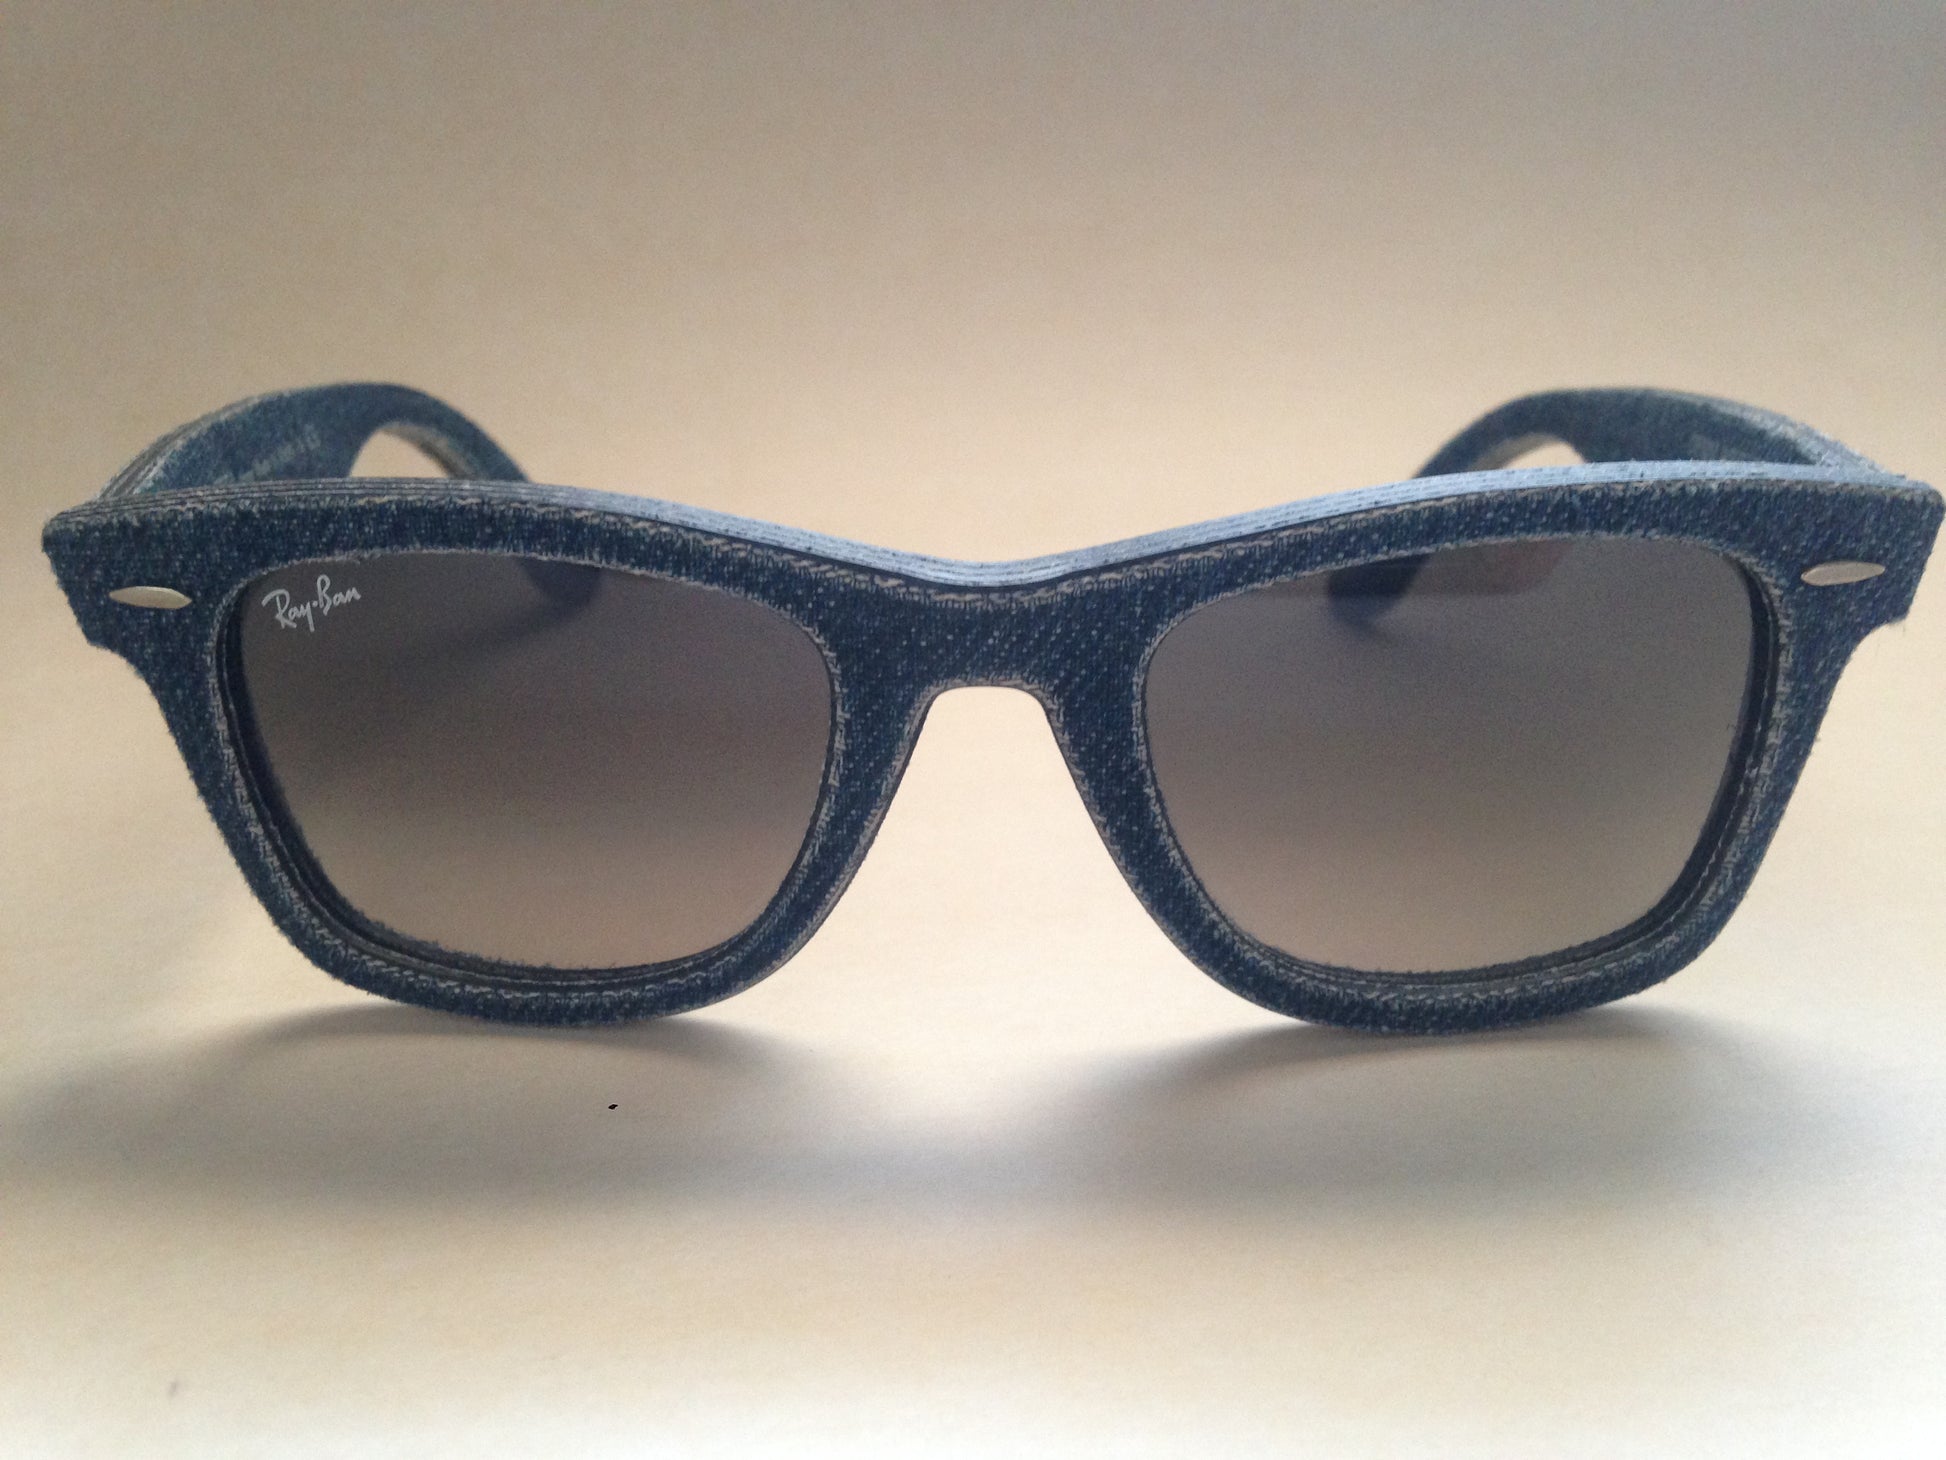 Ray-Ban Denim Wayfarer Sunglasses Rb2140 1163/71 Blue Jean Denim Frame Gray Gradient Lens - Sunglasses